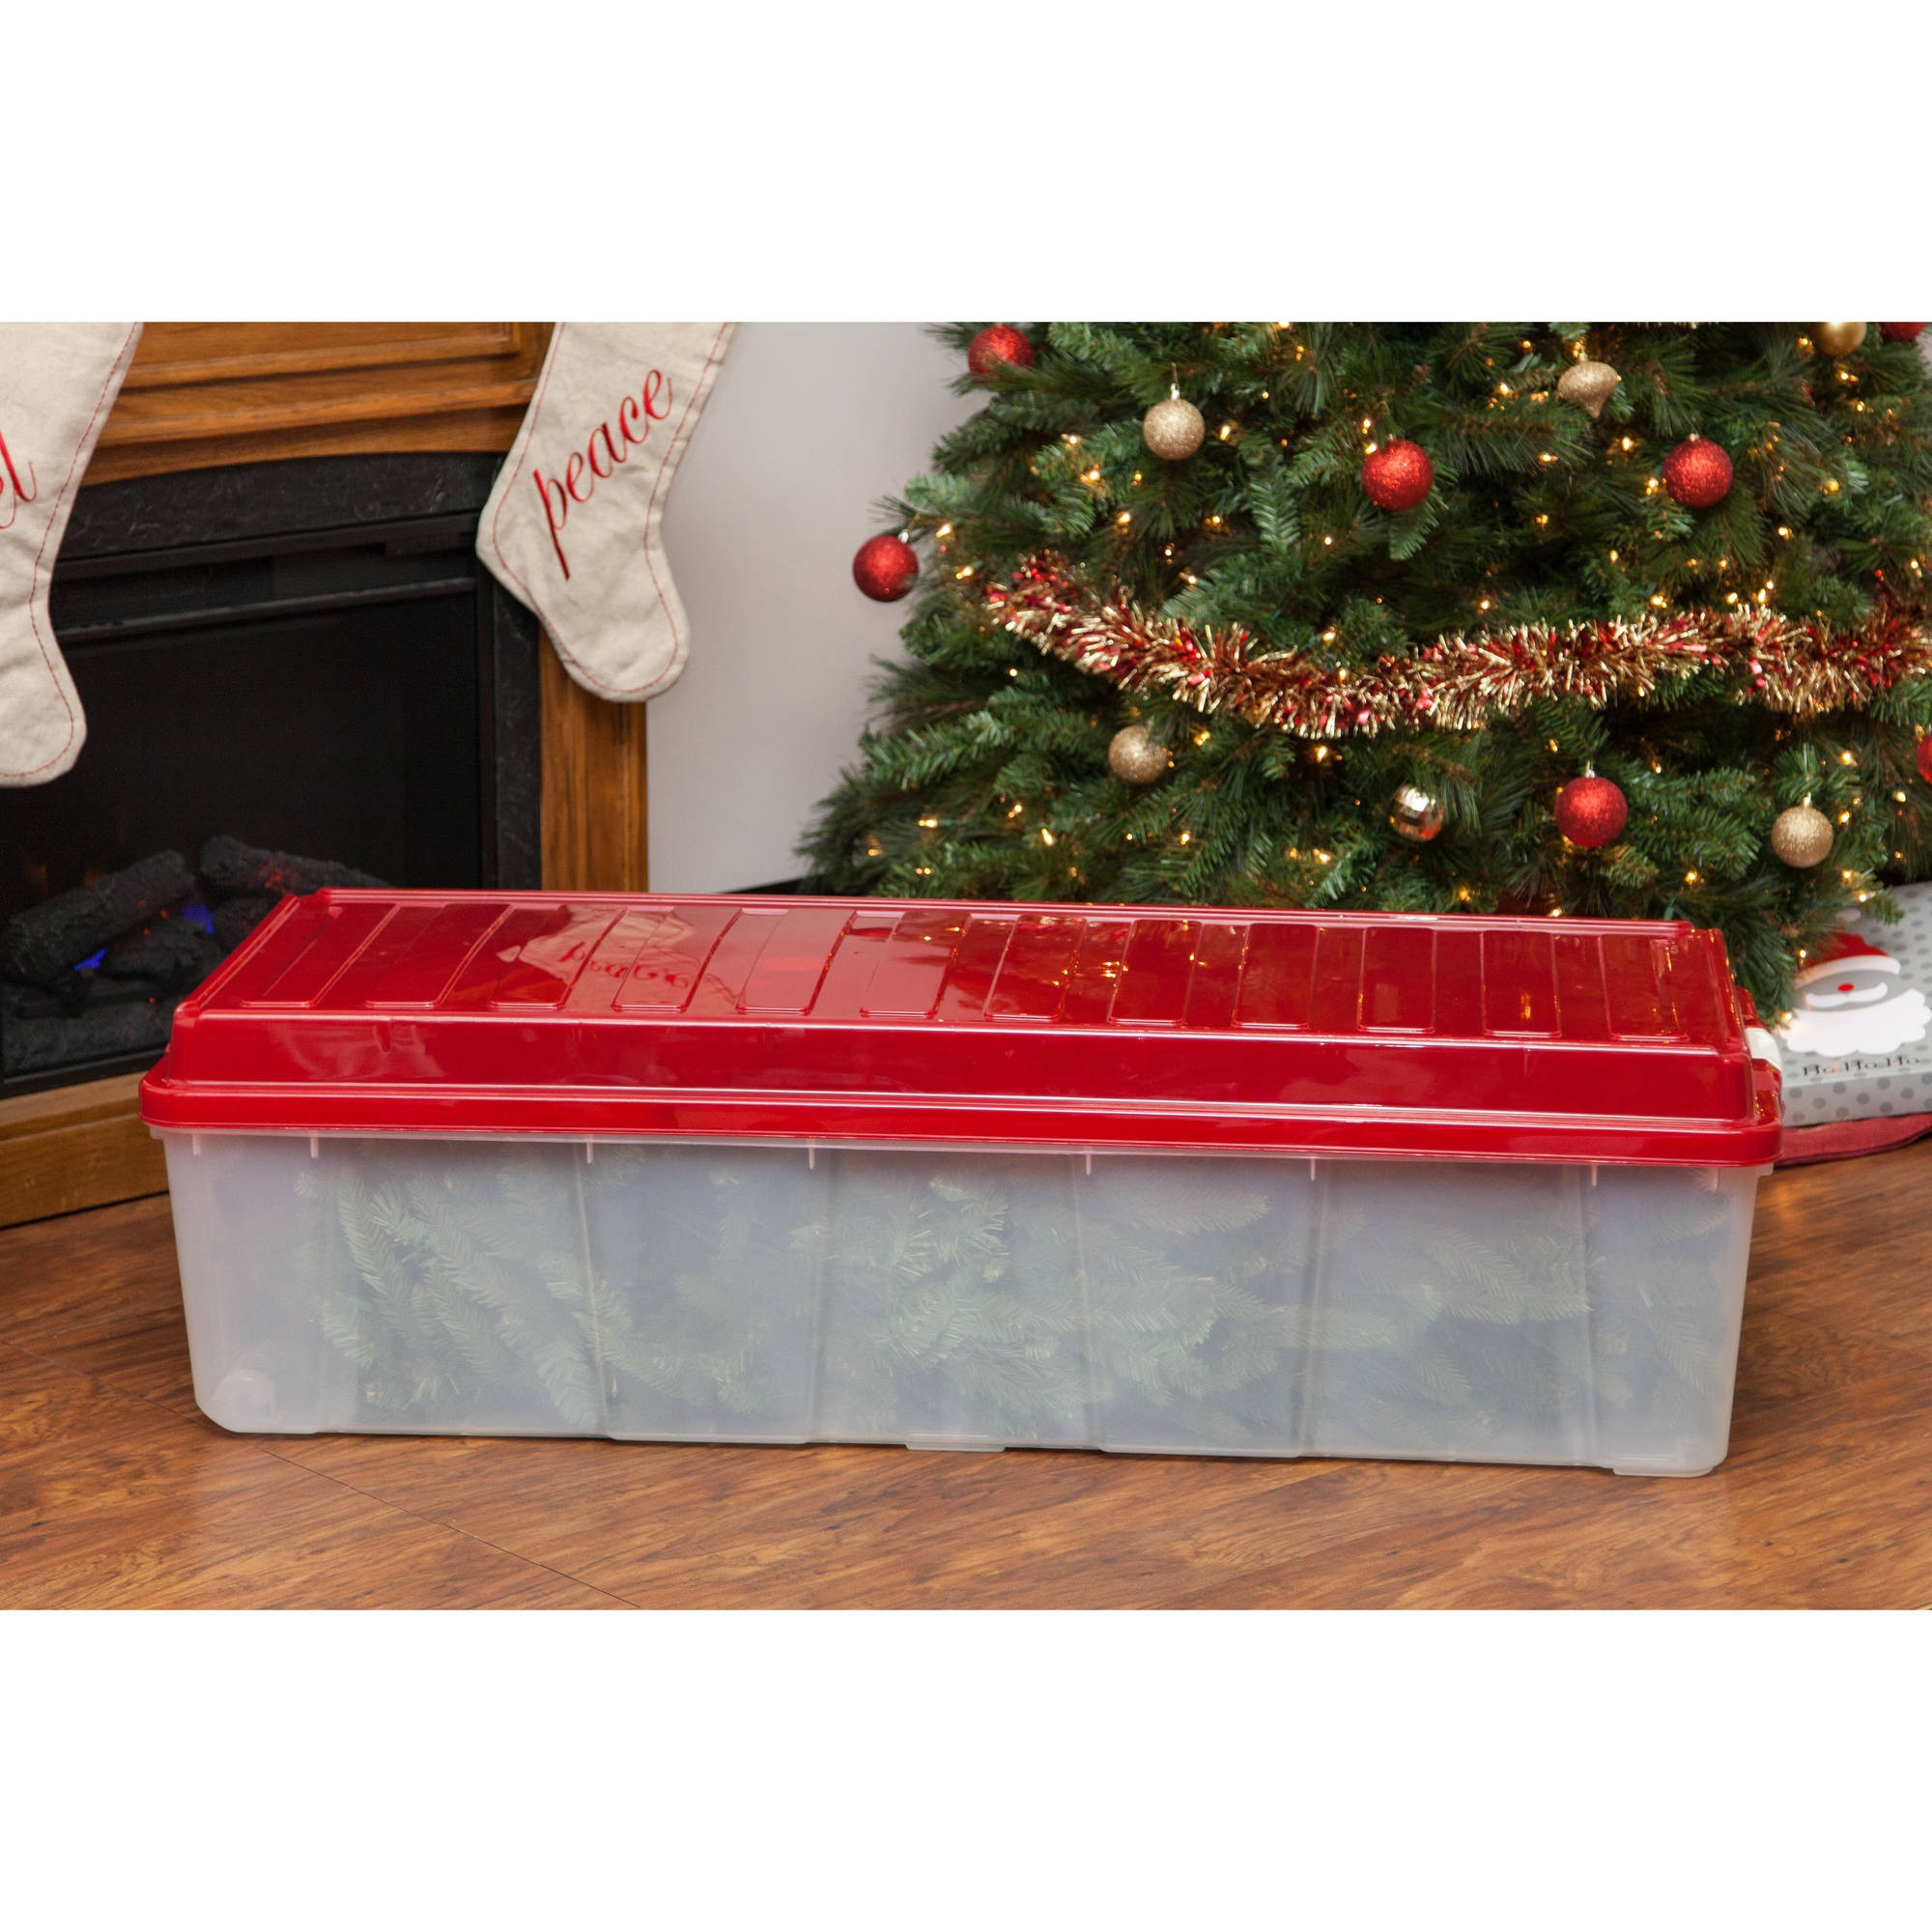 Christmas Tree Storage Bin
 Iris Holiday Ornament Storage Box